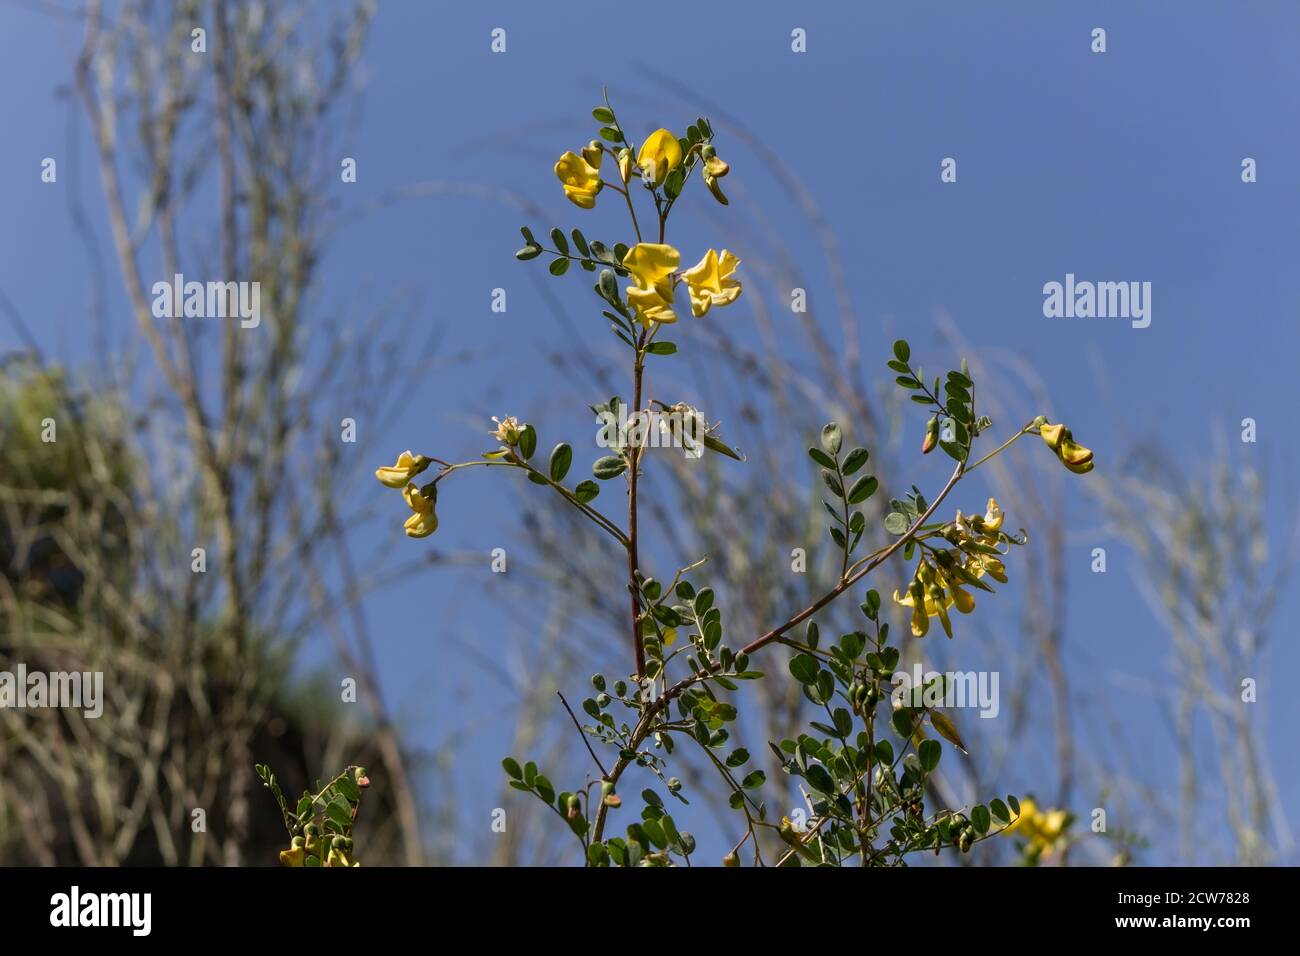 Colutea arborescens Hispanica, Bladder senna Plant in Flower Stock Photo